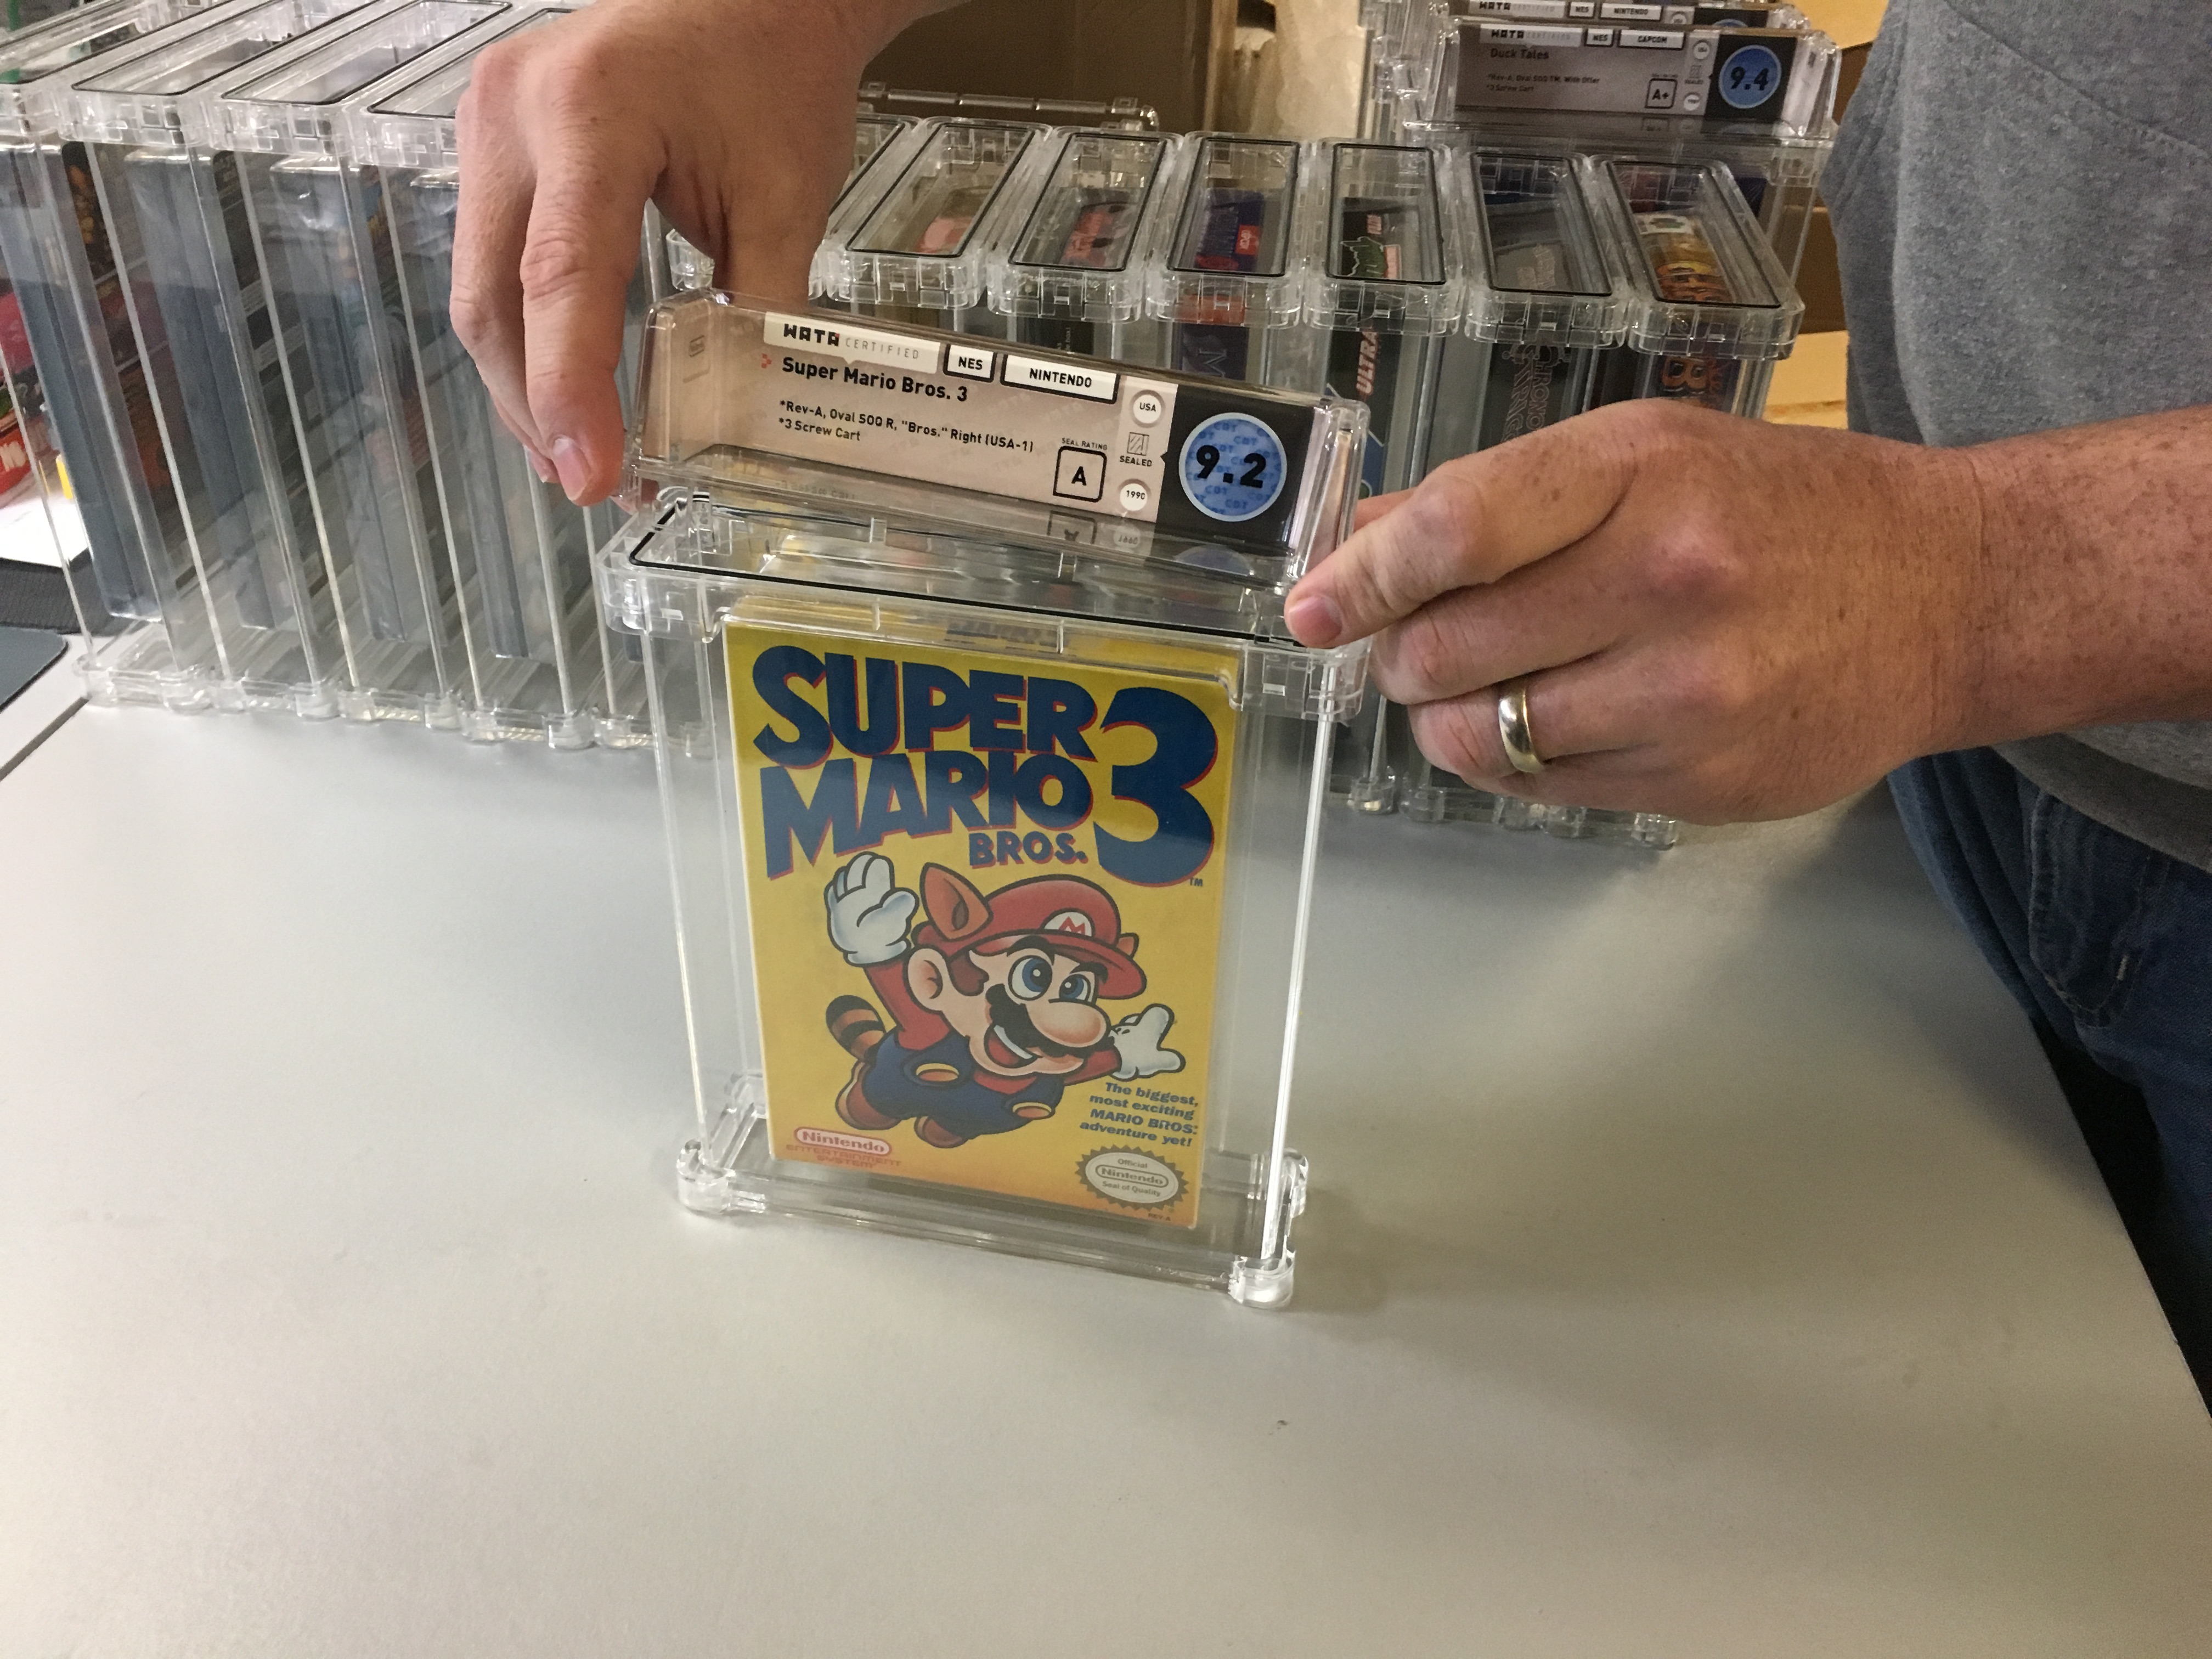 Super Mario Bros упаковка картриджа.